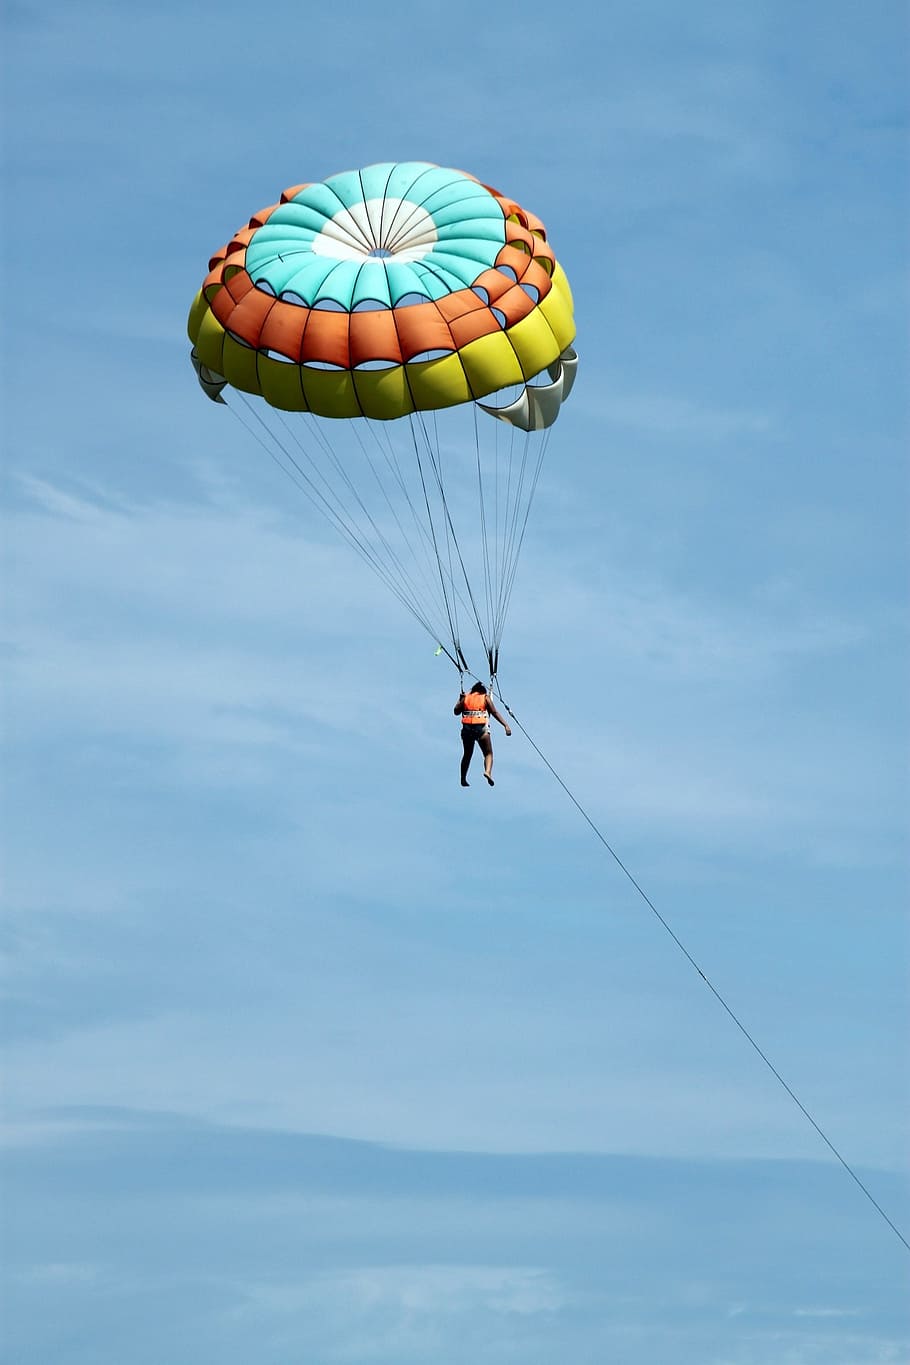 parasailing, controllable parachuting, parachute, fly, bird's eye view, paragliding, hang gliding, sky, blue, colorful